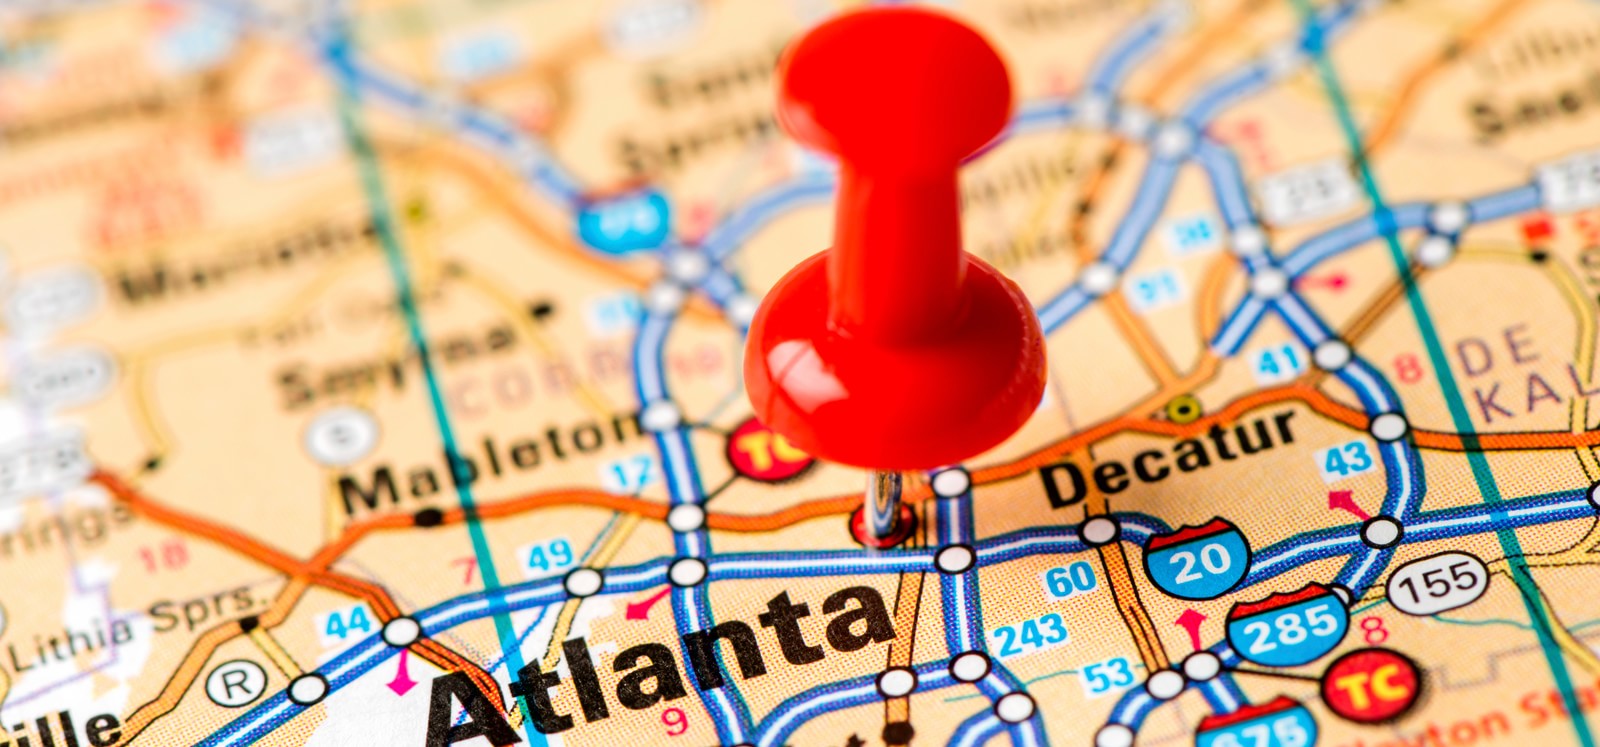 Push pin on map, marking Atlanta Georgia - image for Tutoring Locations page